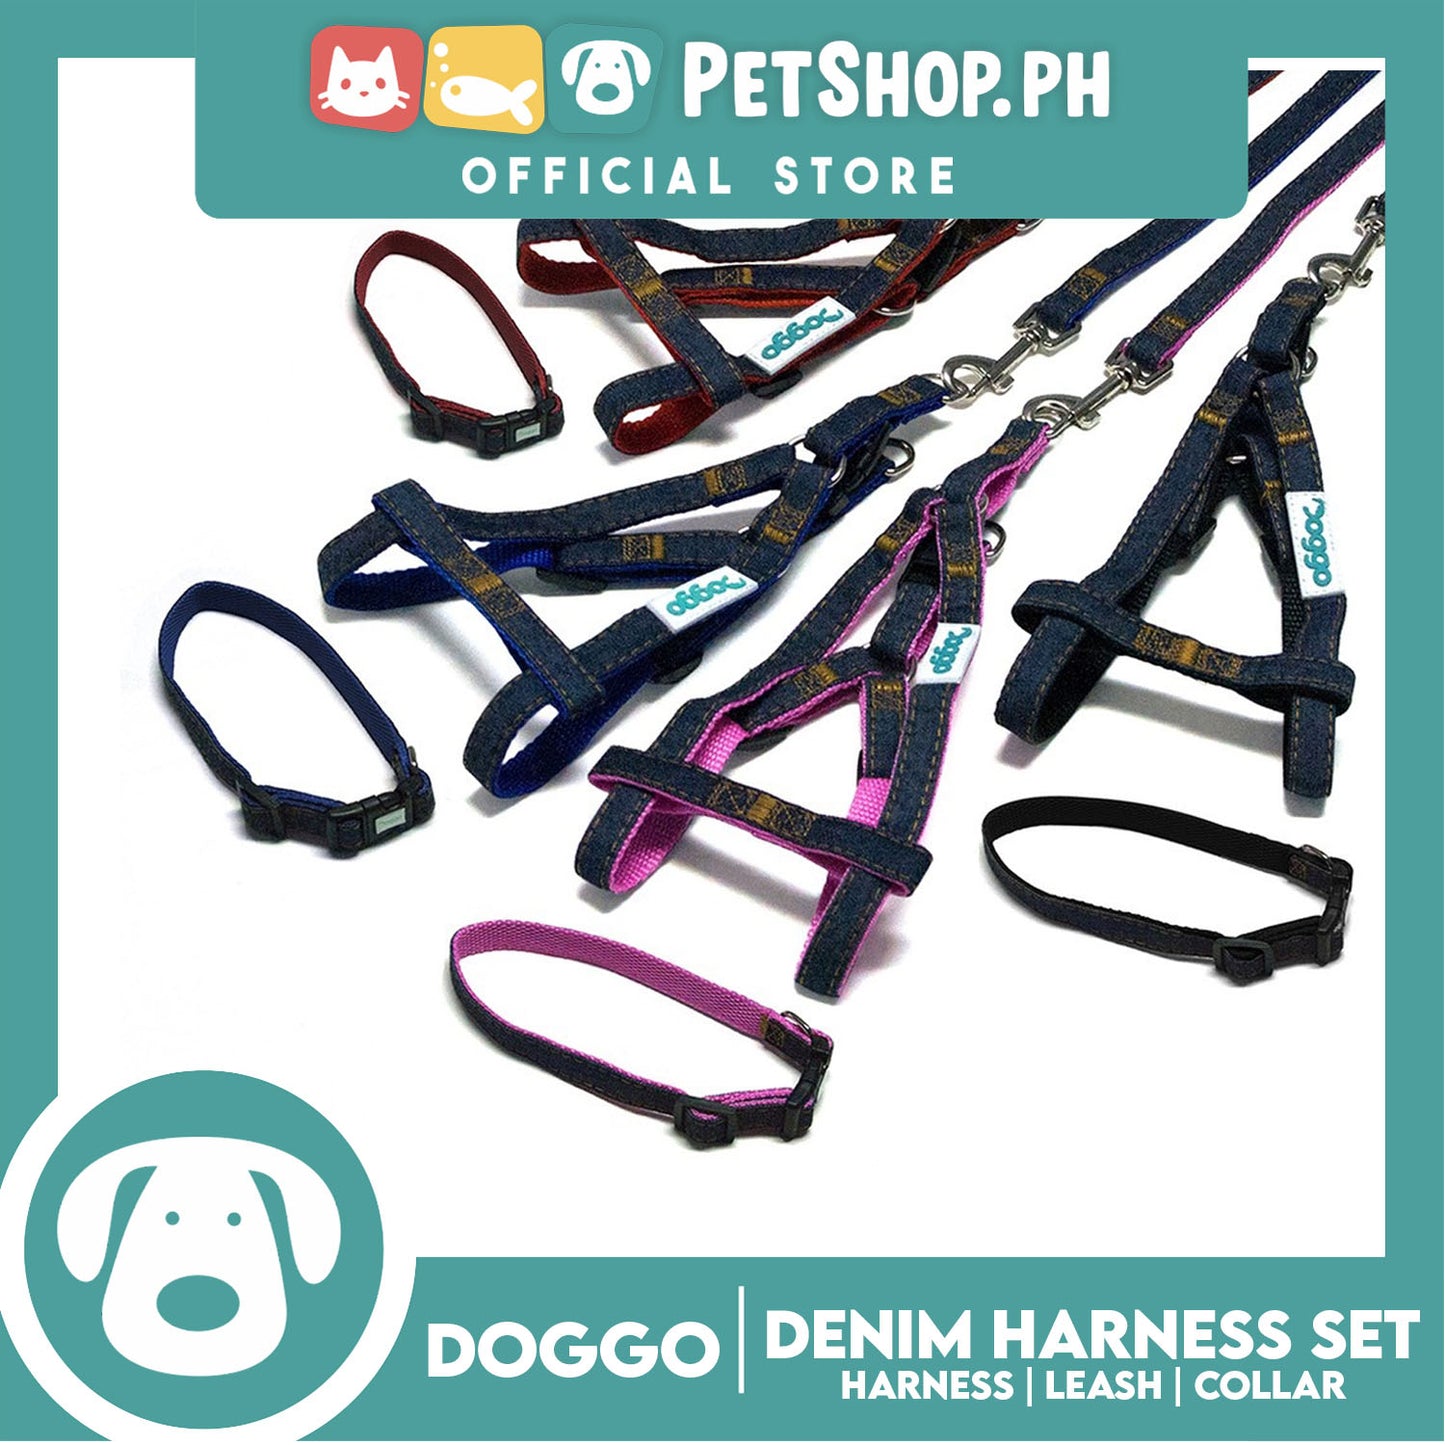 Doggo Strong Harness Set Denim Design Medium (Black) Harness, Leash and Collar for Your Dog